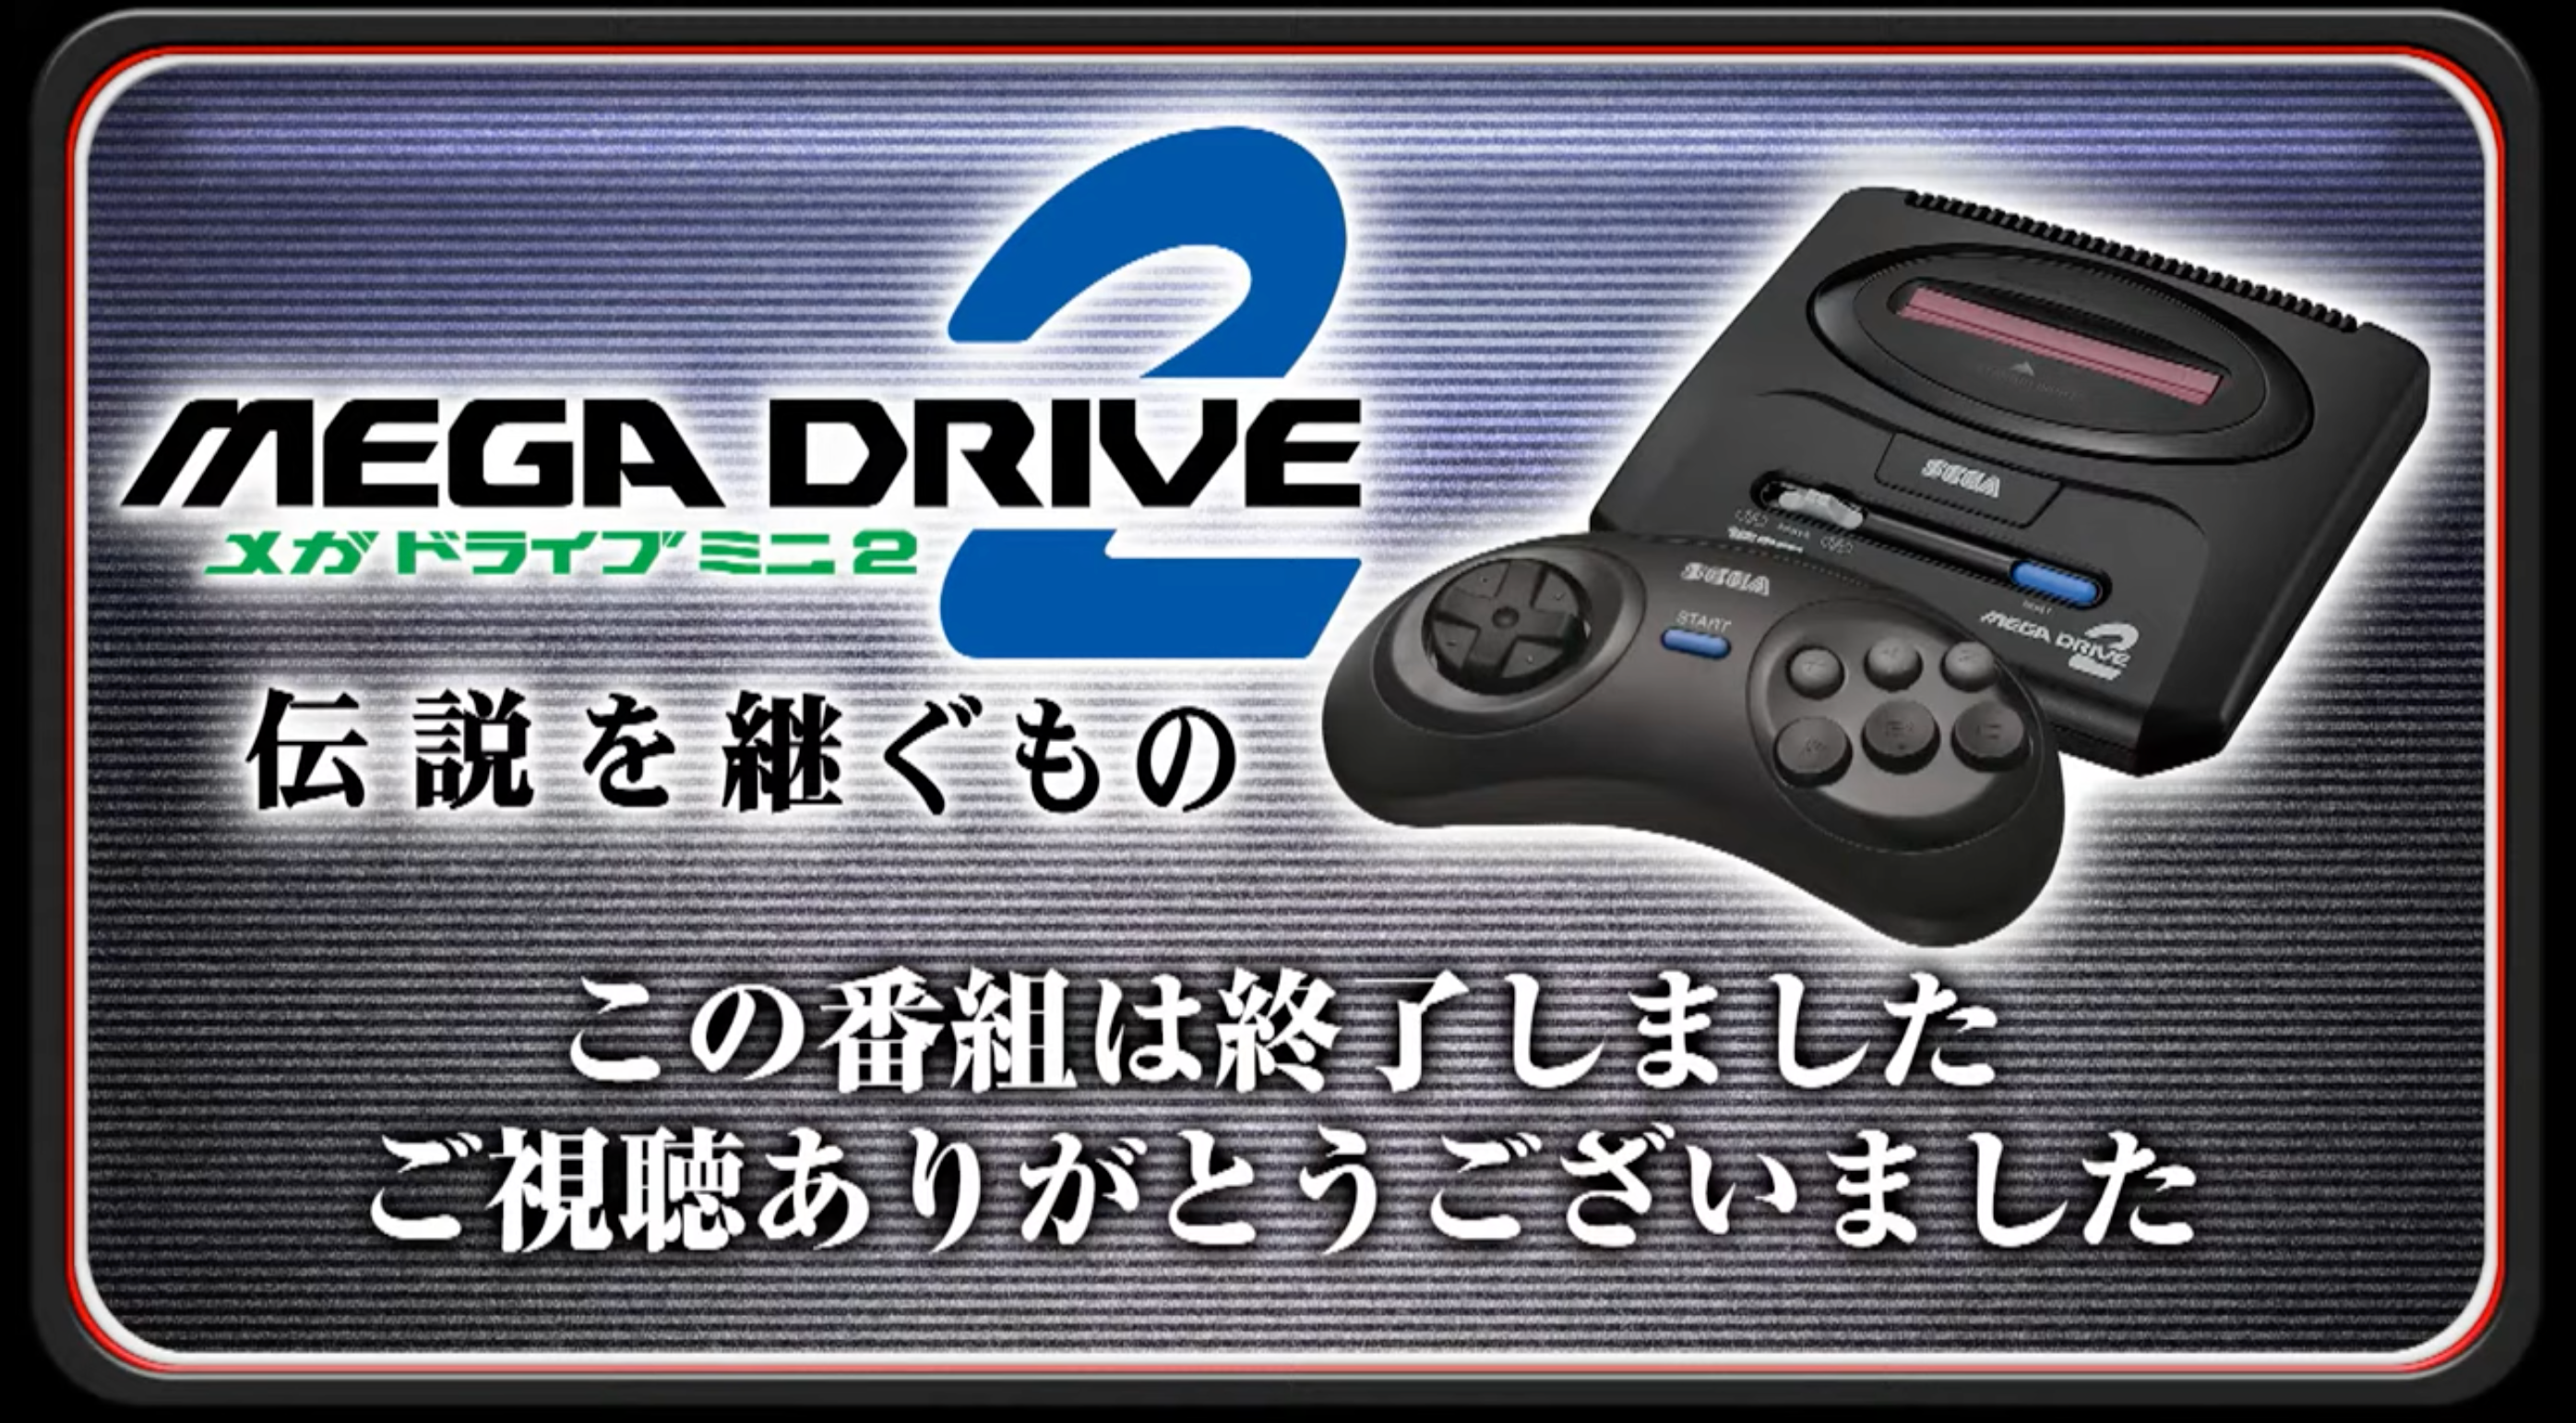 Sega przedstawia Mega Drive Mini 2, w tym gry Mega Drive i Mega CD